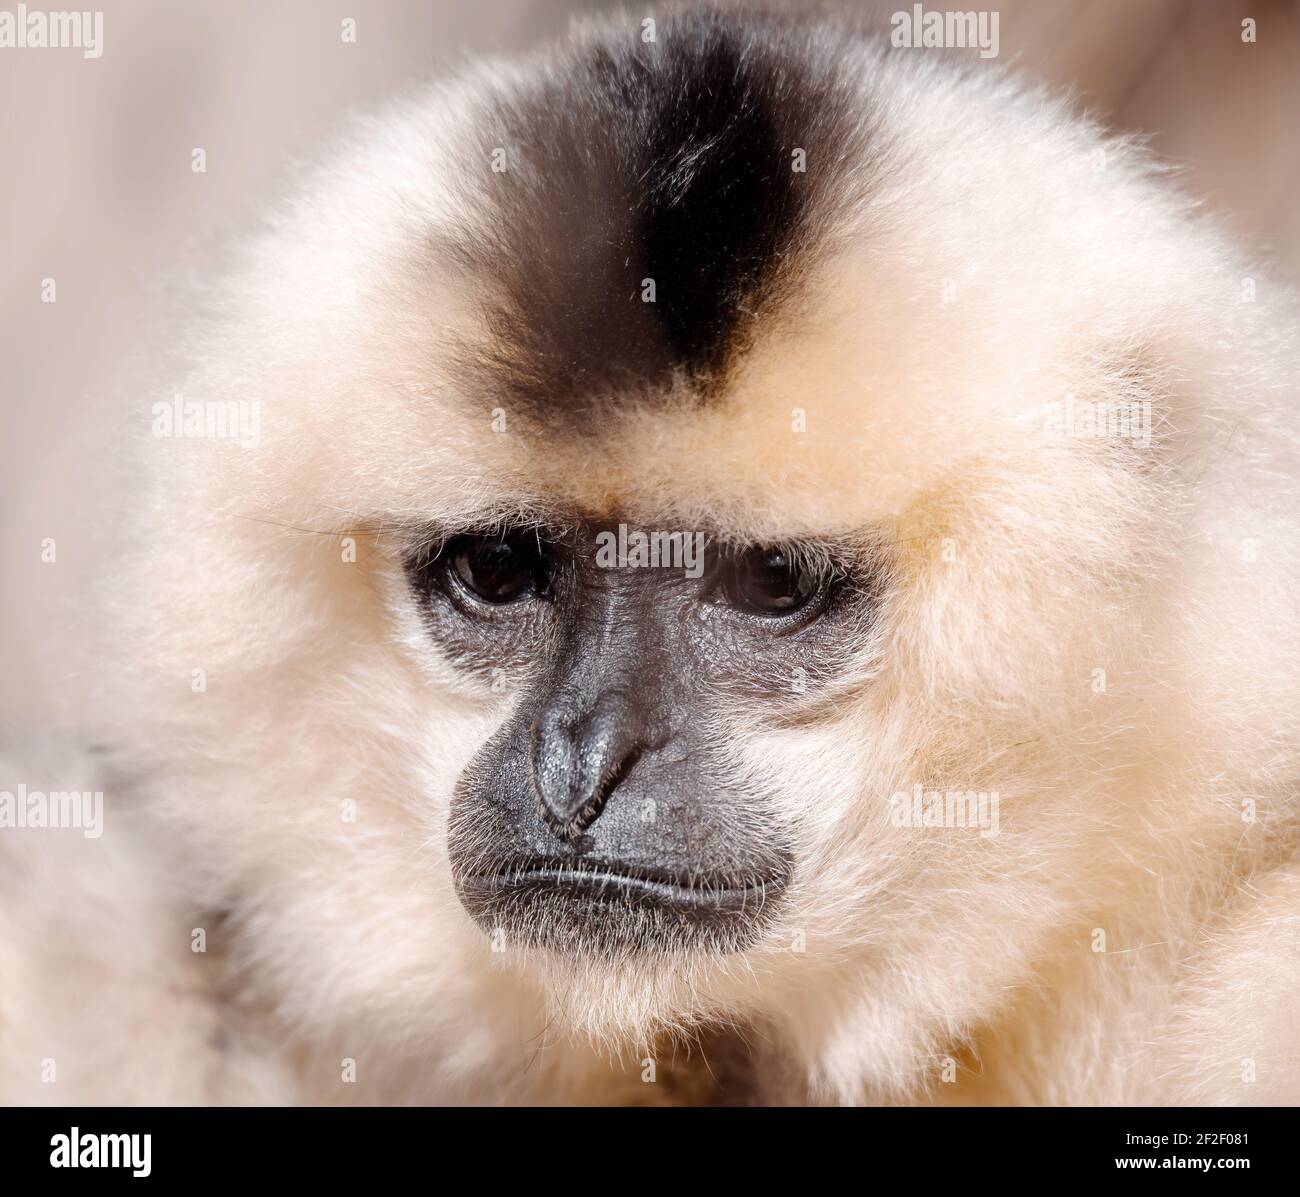 Primate Gelber Wabengibbon (Nomascus gabriellae), Nahaufnahme Porträt Stockfoto